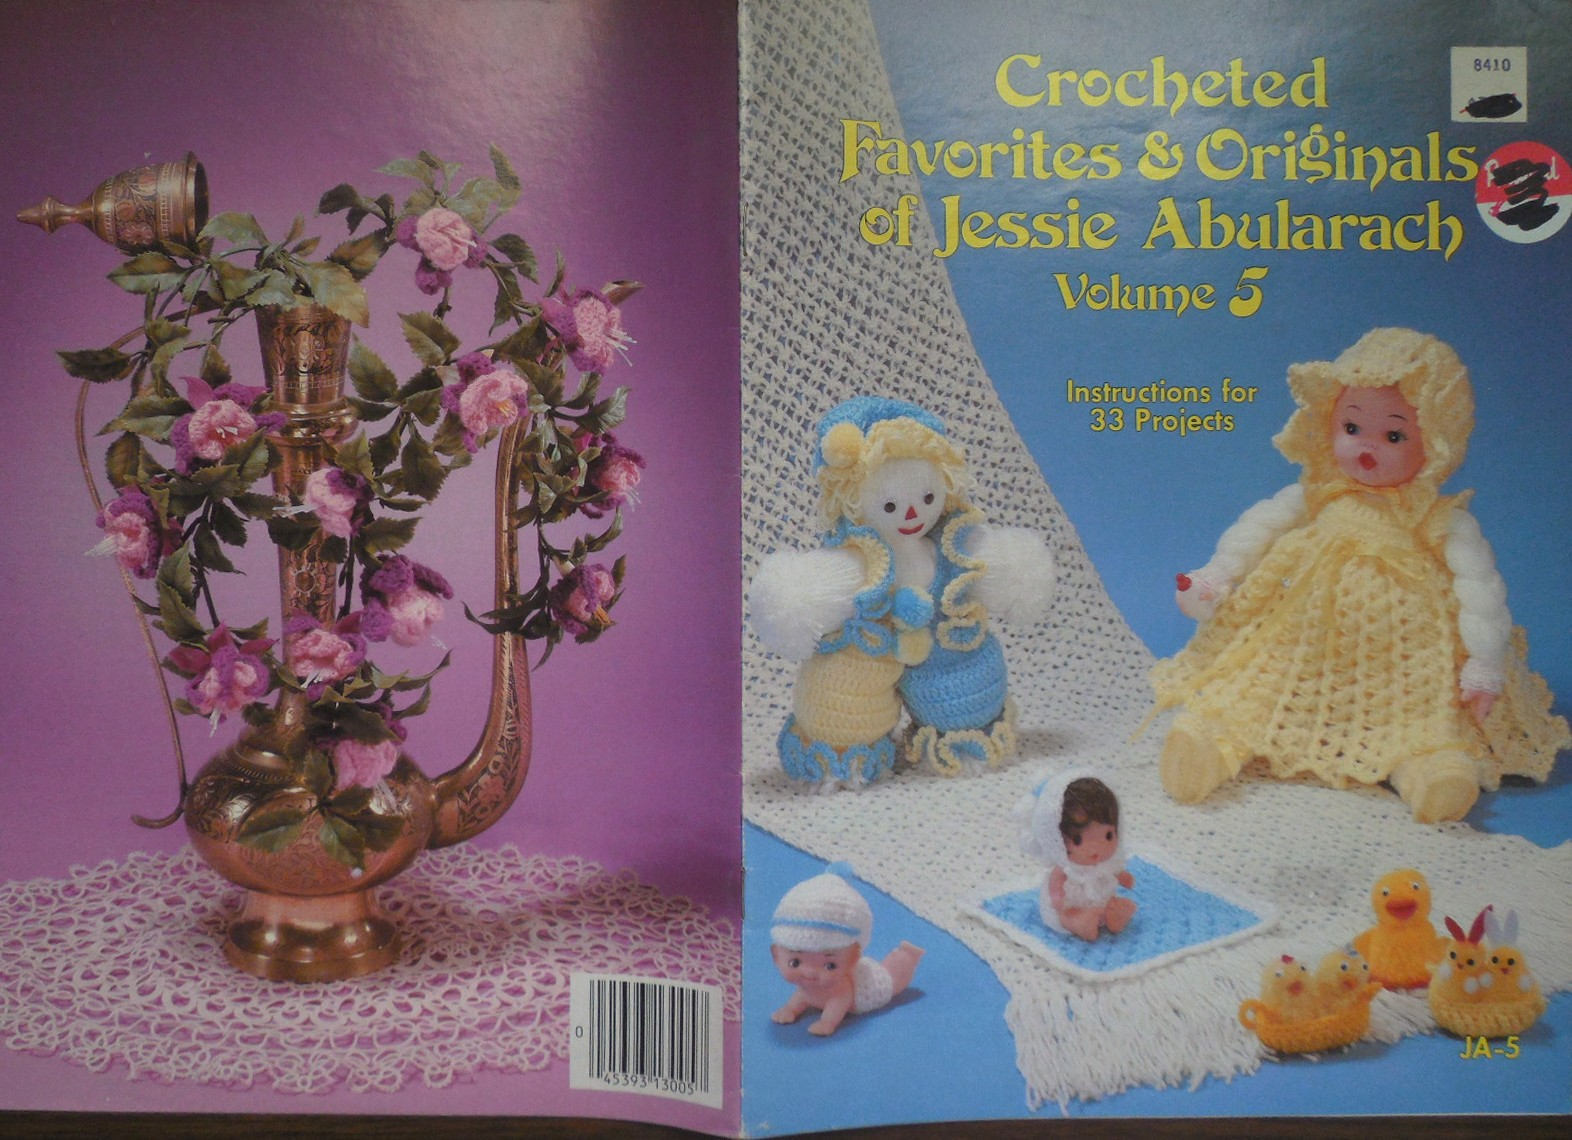 Crocheted Favorites & Originals of Jessie Abularach 1982, holiday, toys, decor - $10.00